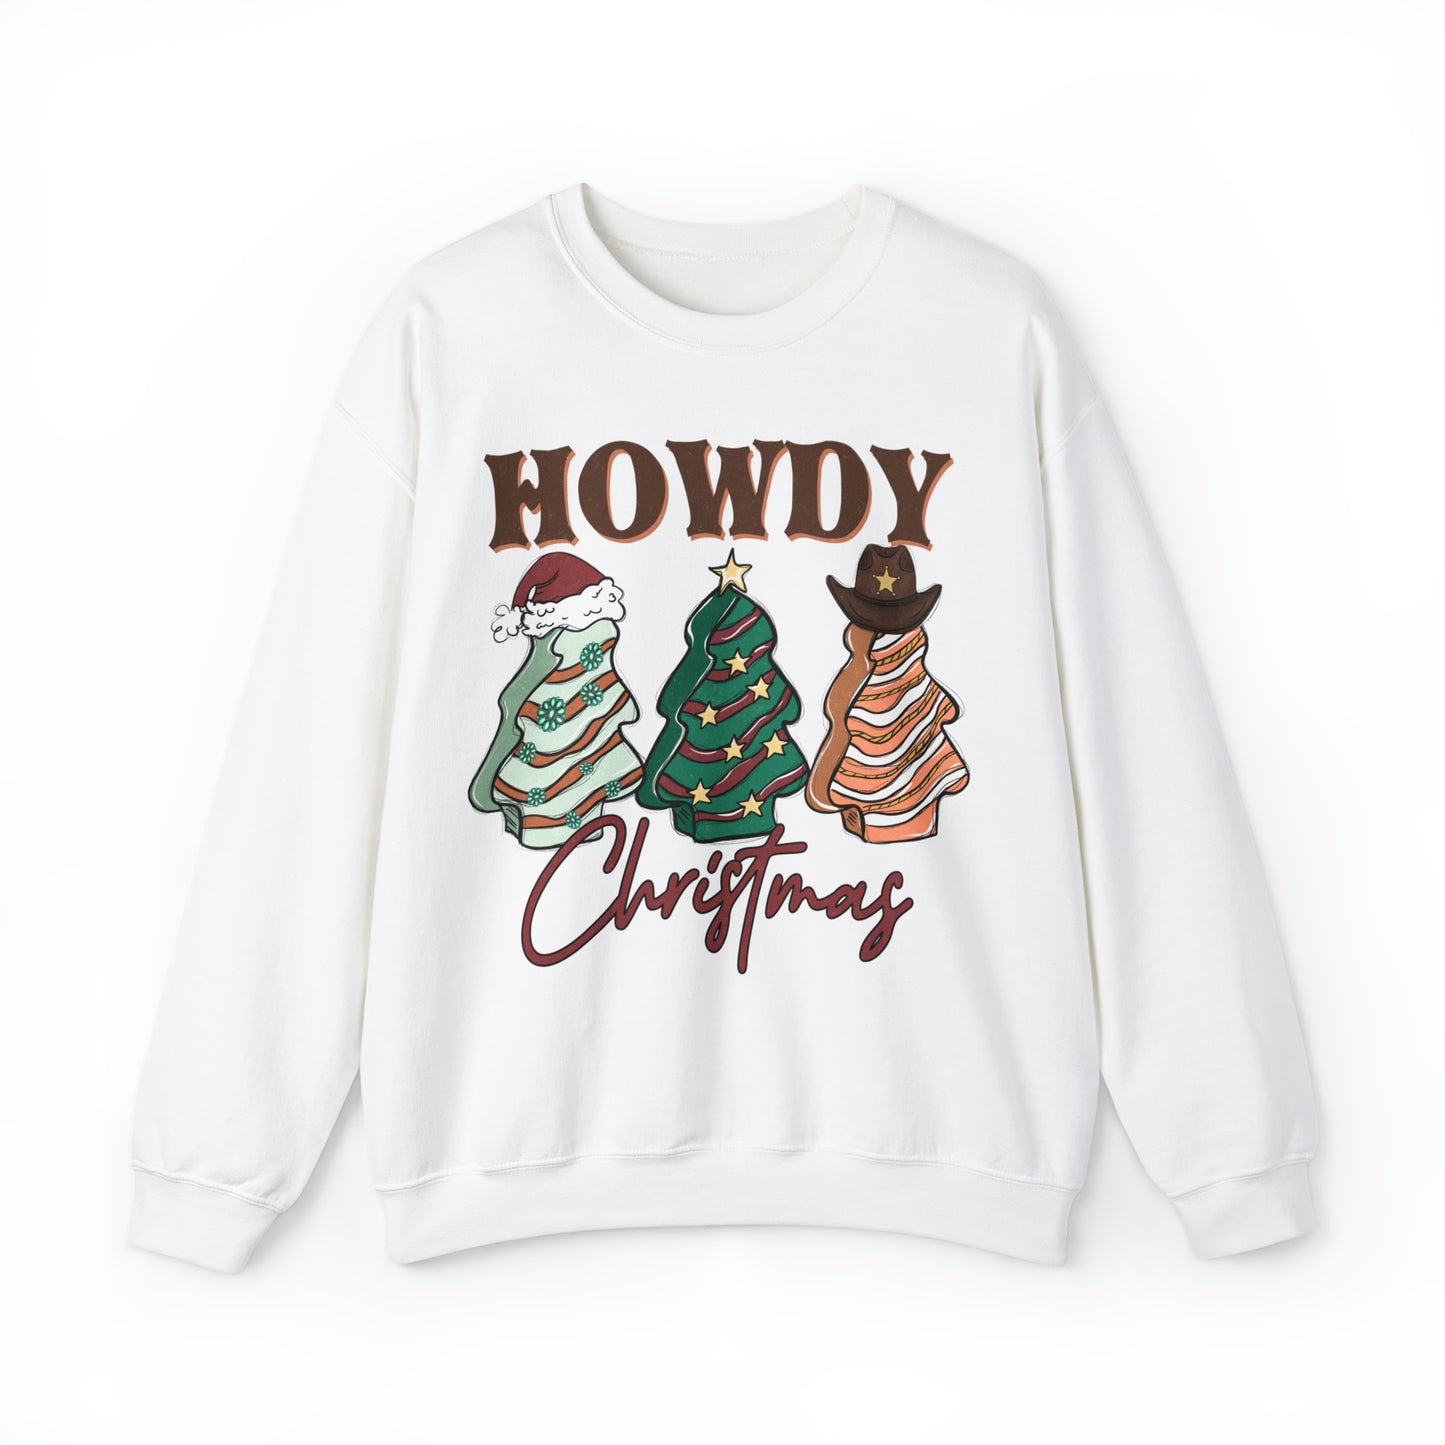 Howdy Christmas Western Themed Christmas Tree Sweater